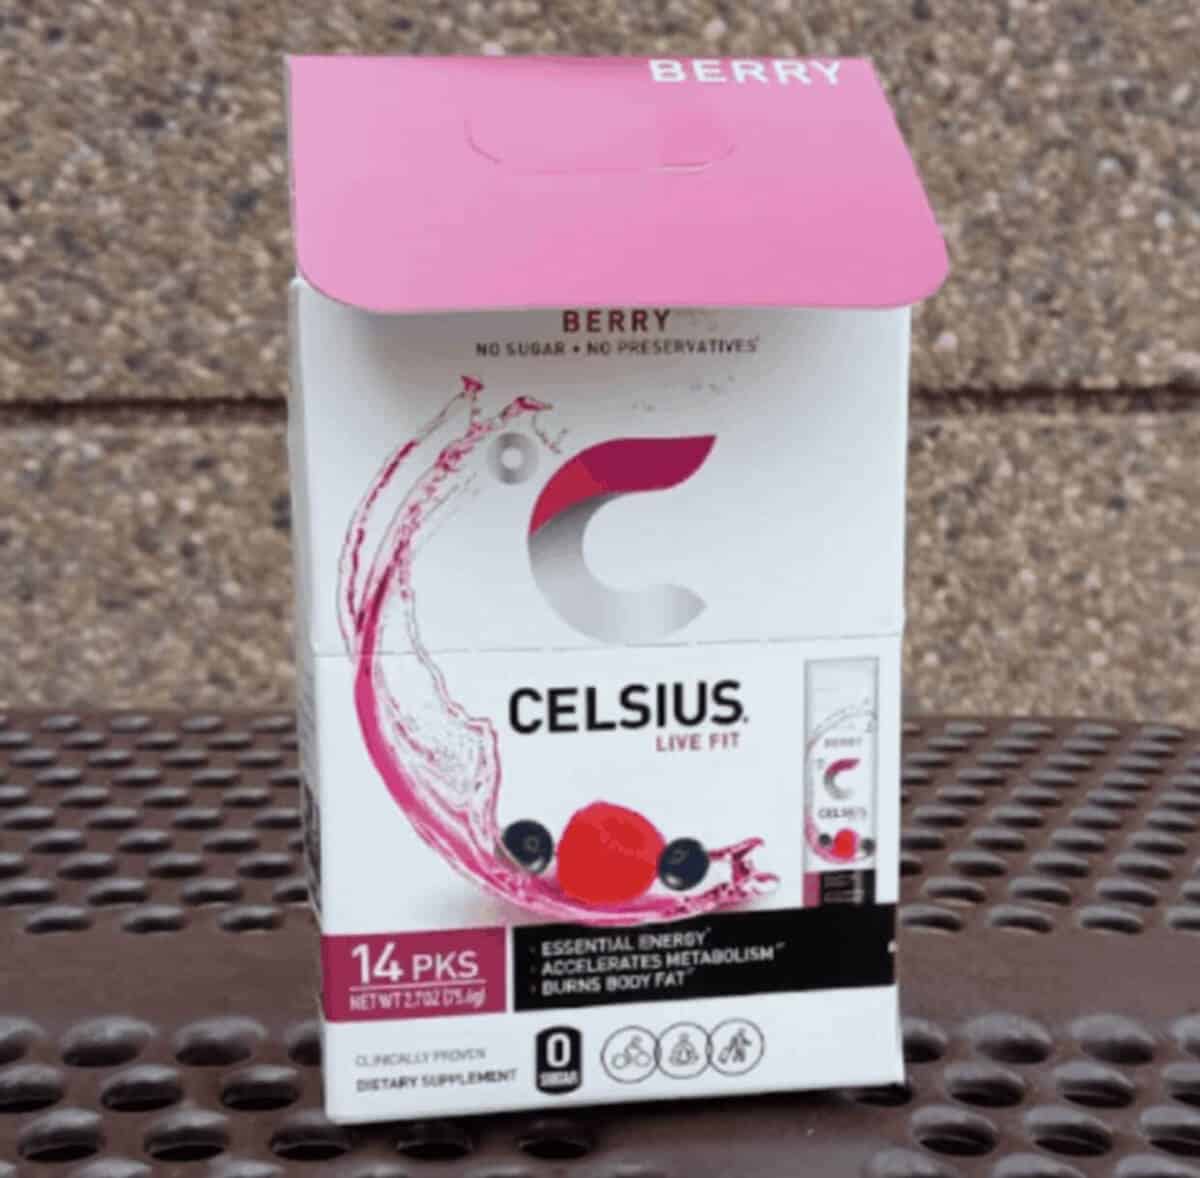 Celsius energy drink Berry flavor